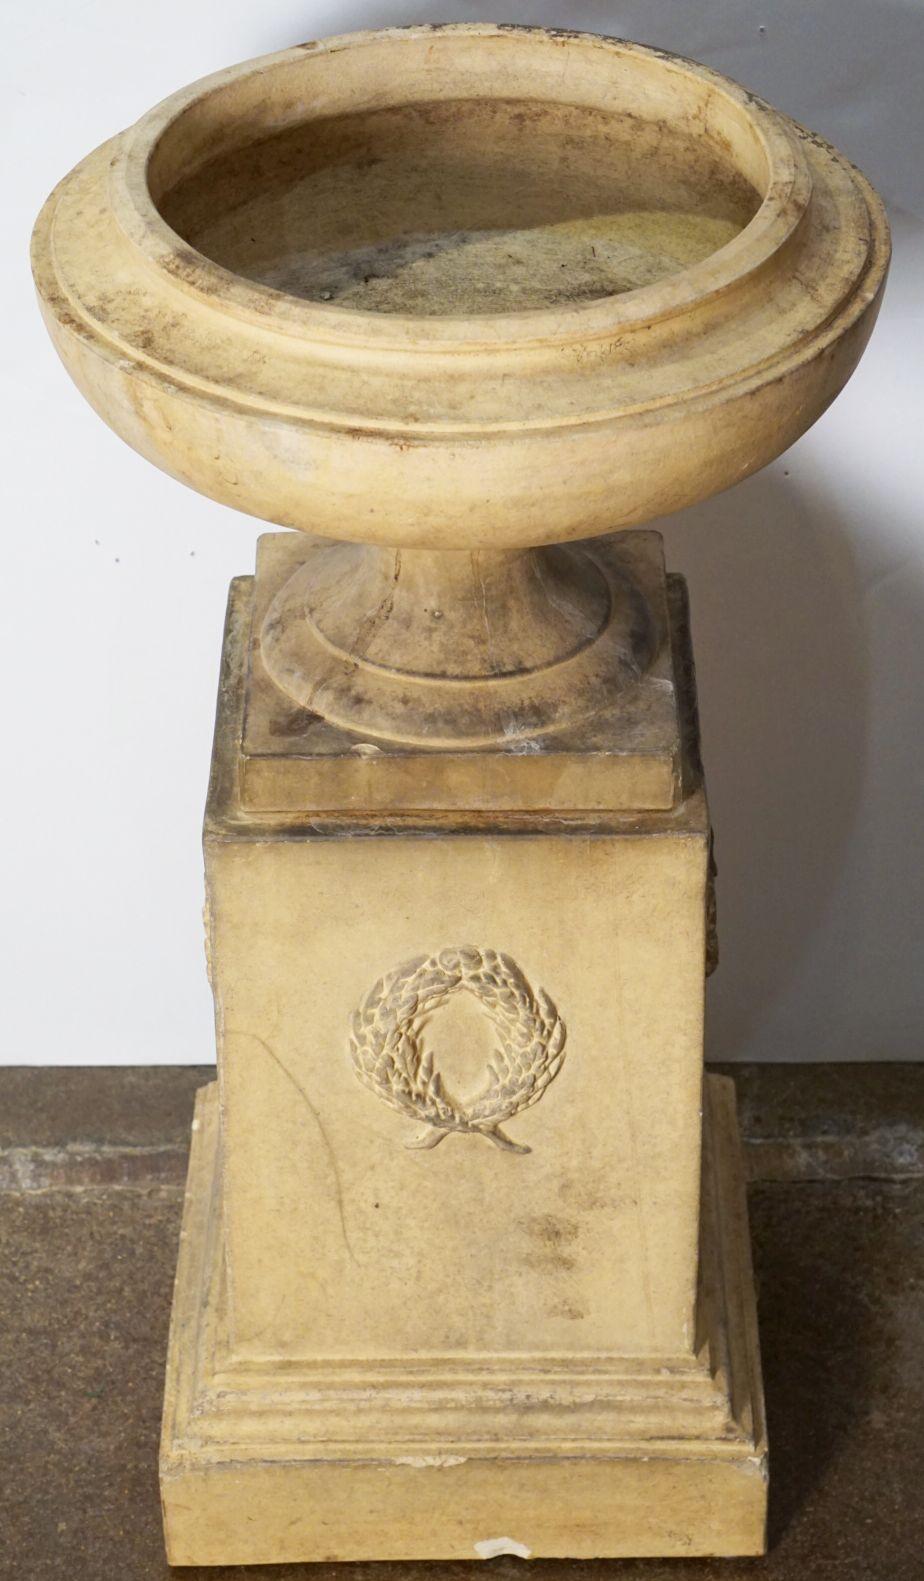 19th Century English Garden Planter Pot or Urn on Plinth of Terracotta by Doulton Lambeth